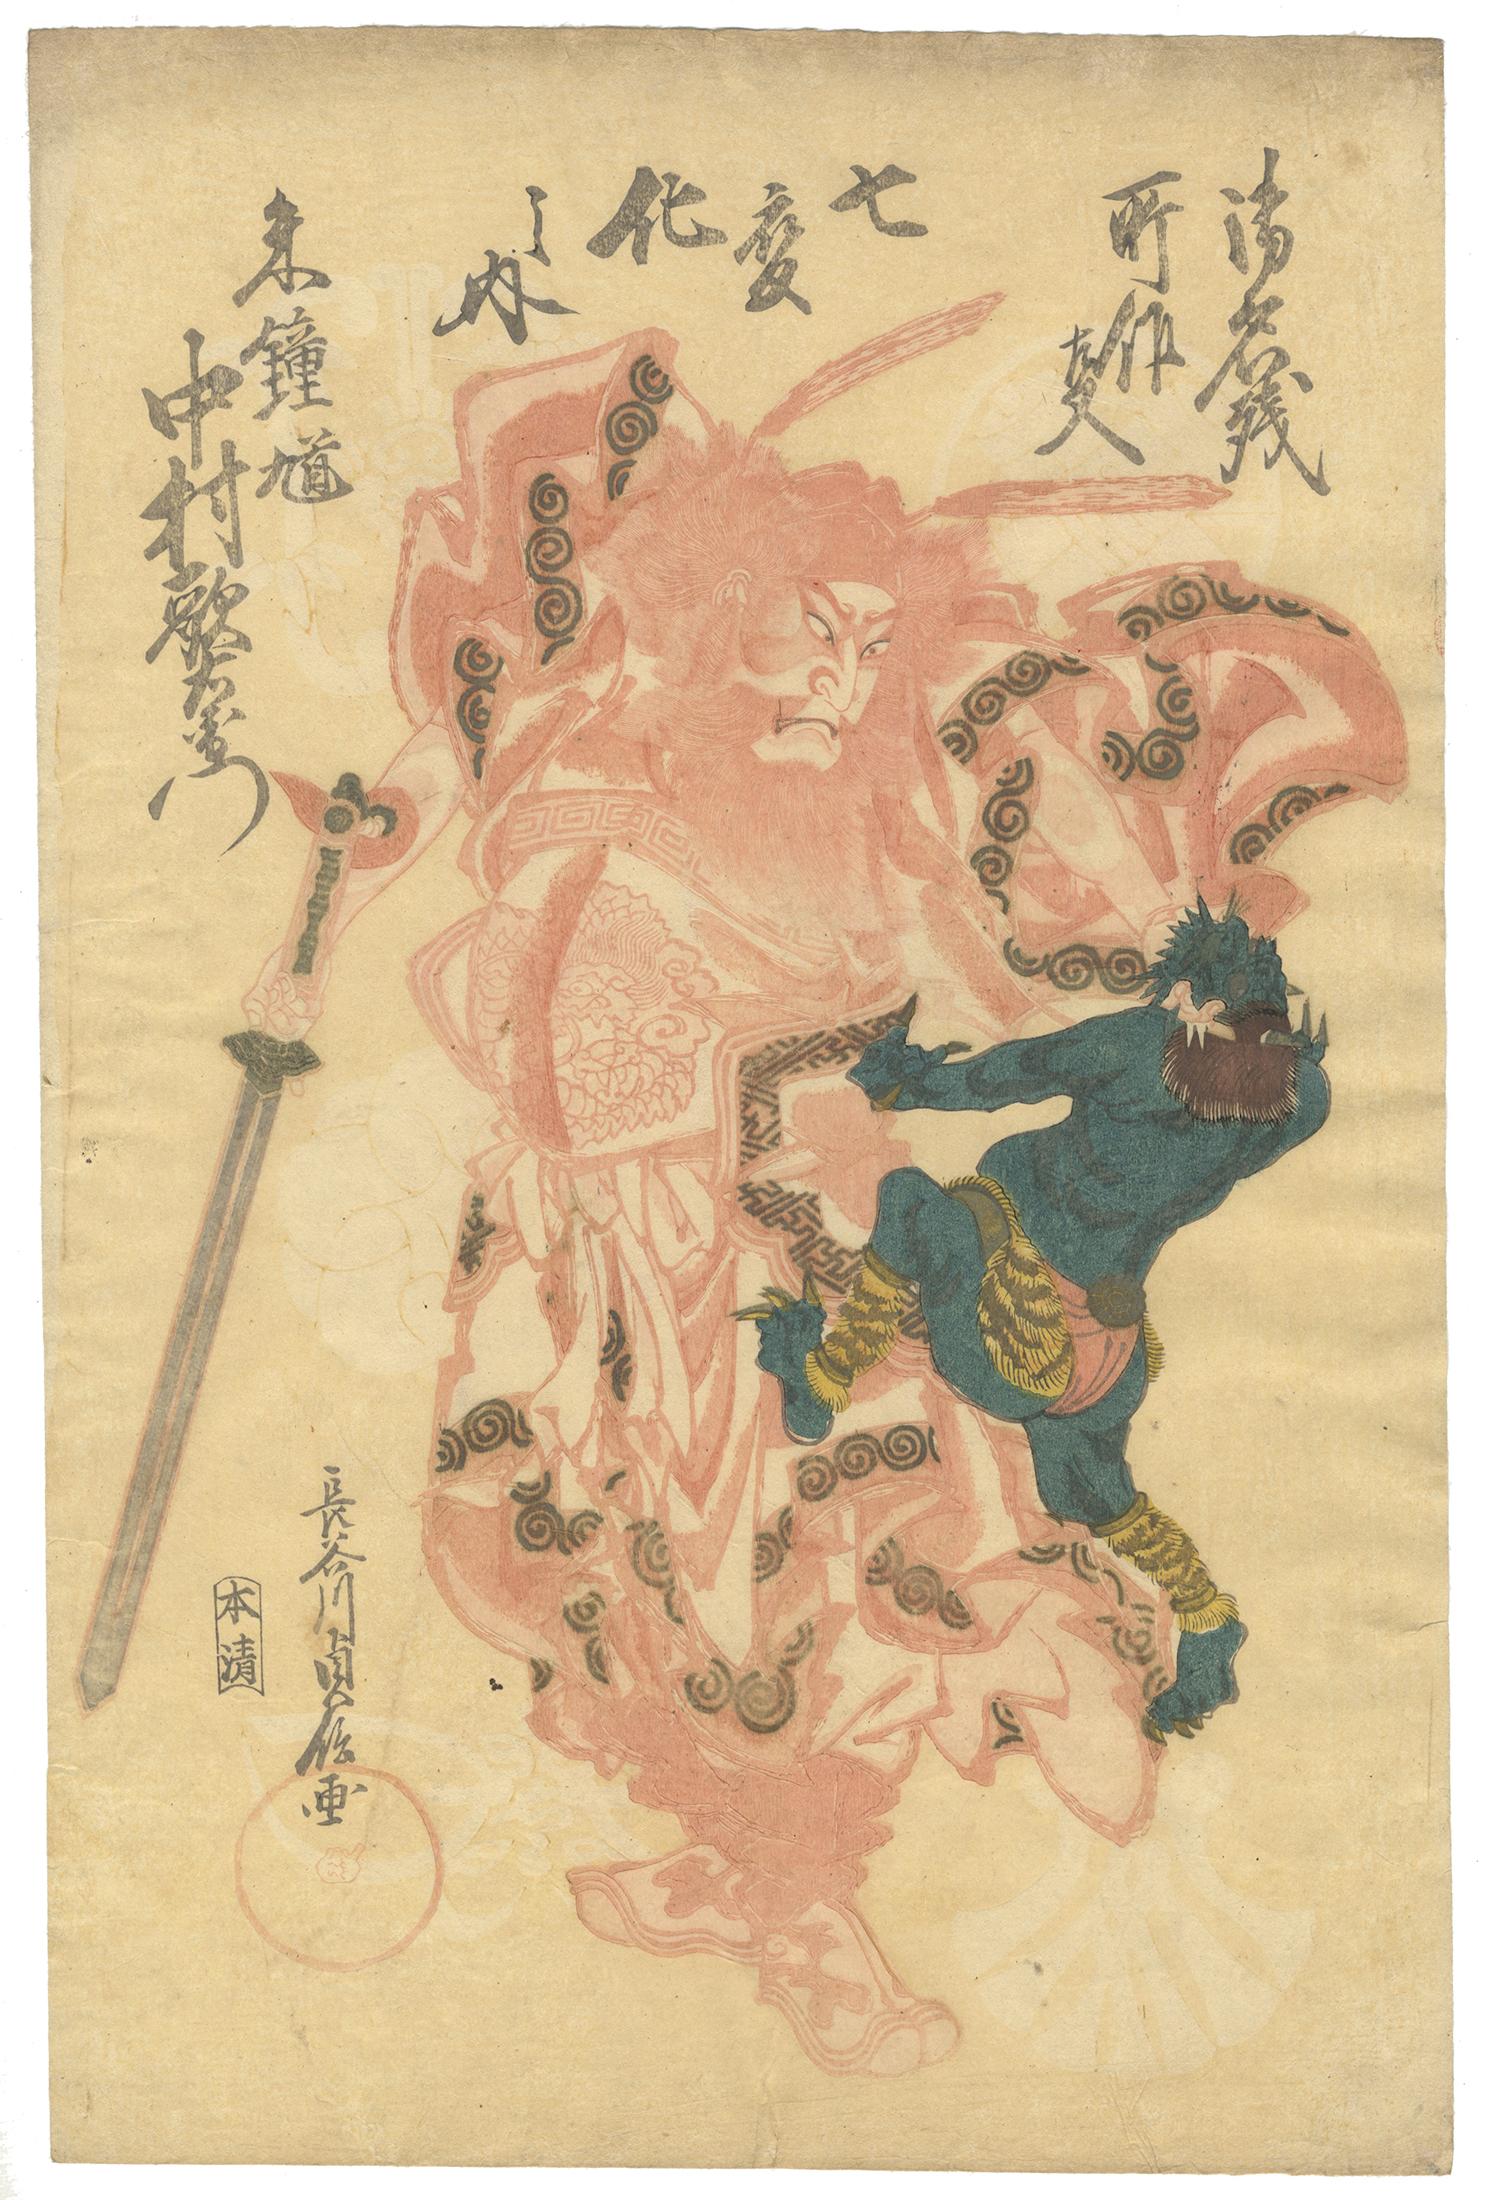 Hasegawa Sadanobu I Portrait Print - Hasegawa Sadanobu, Japanese Woodblock Print, Oni Demon, Ukiyo-e, Edo Period